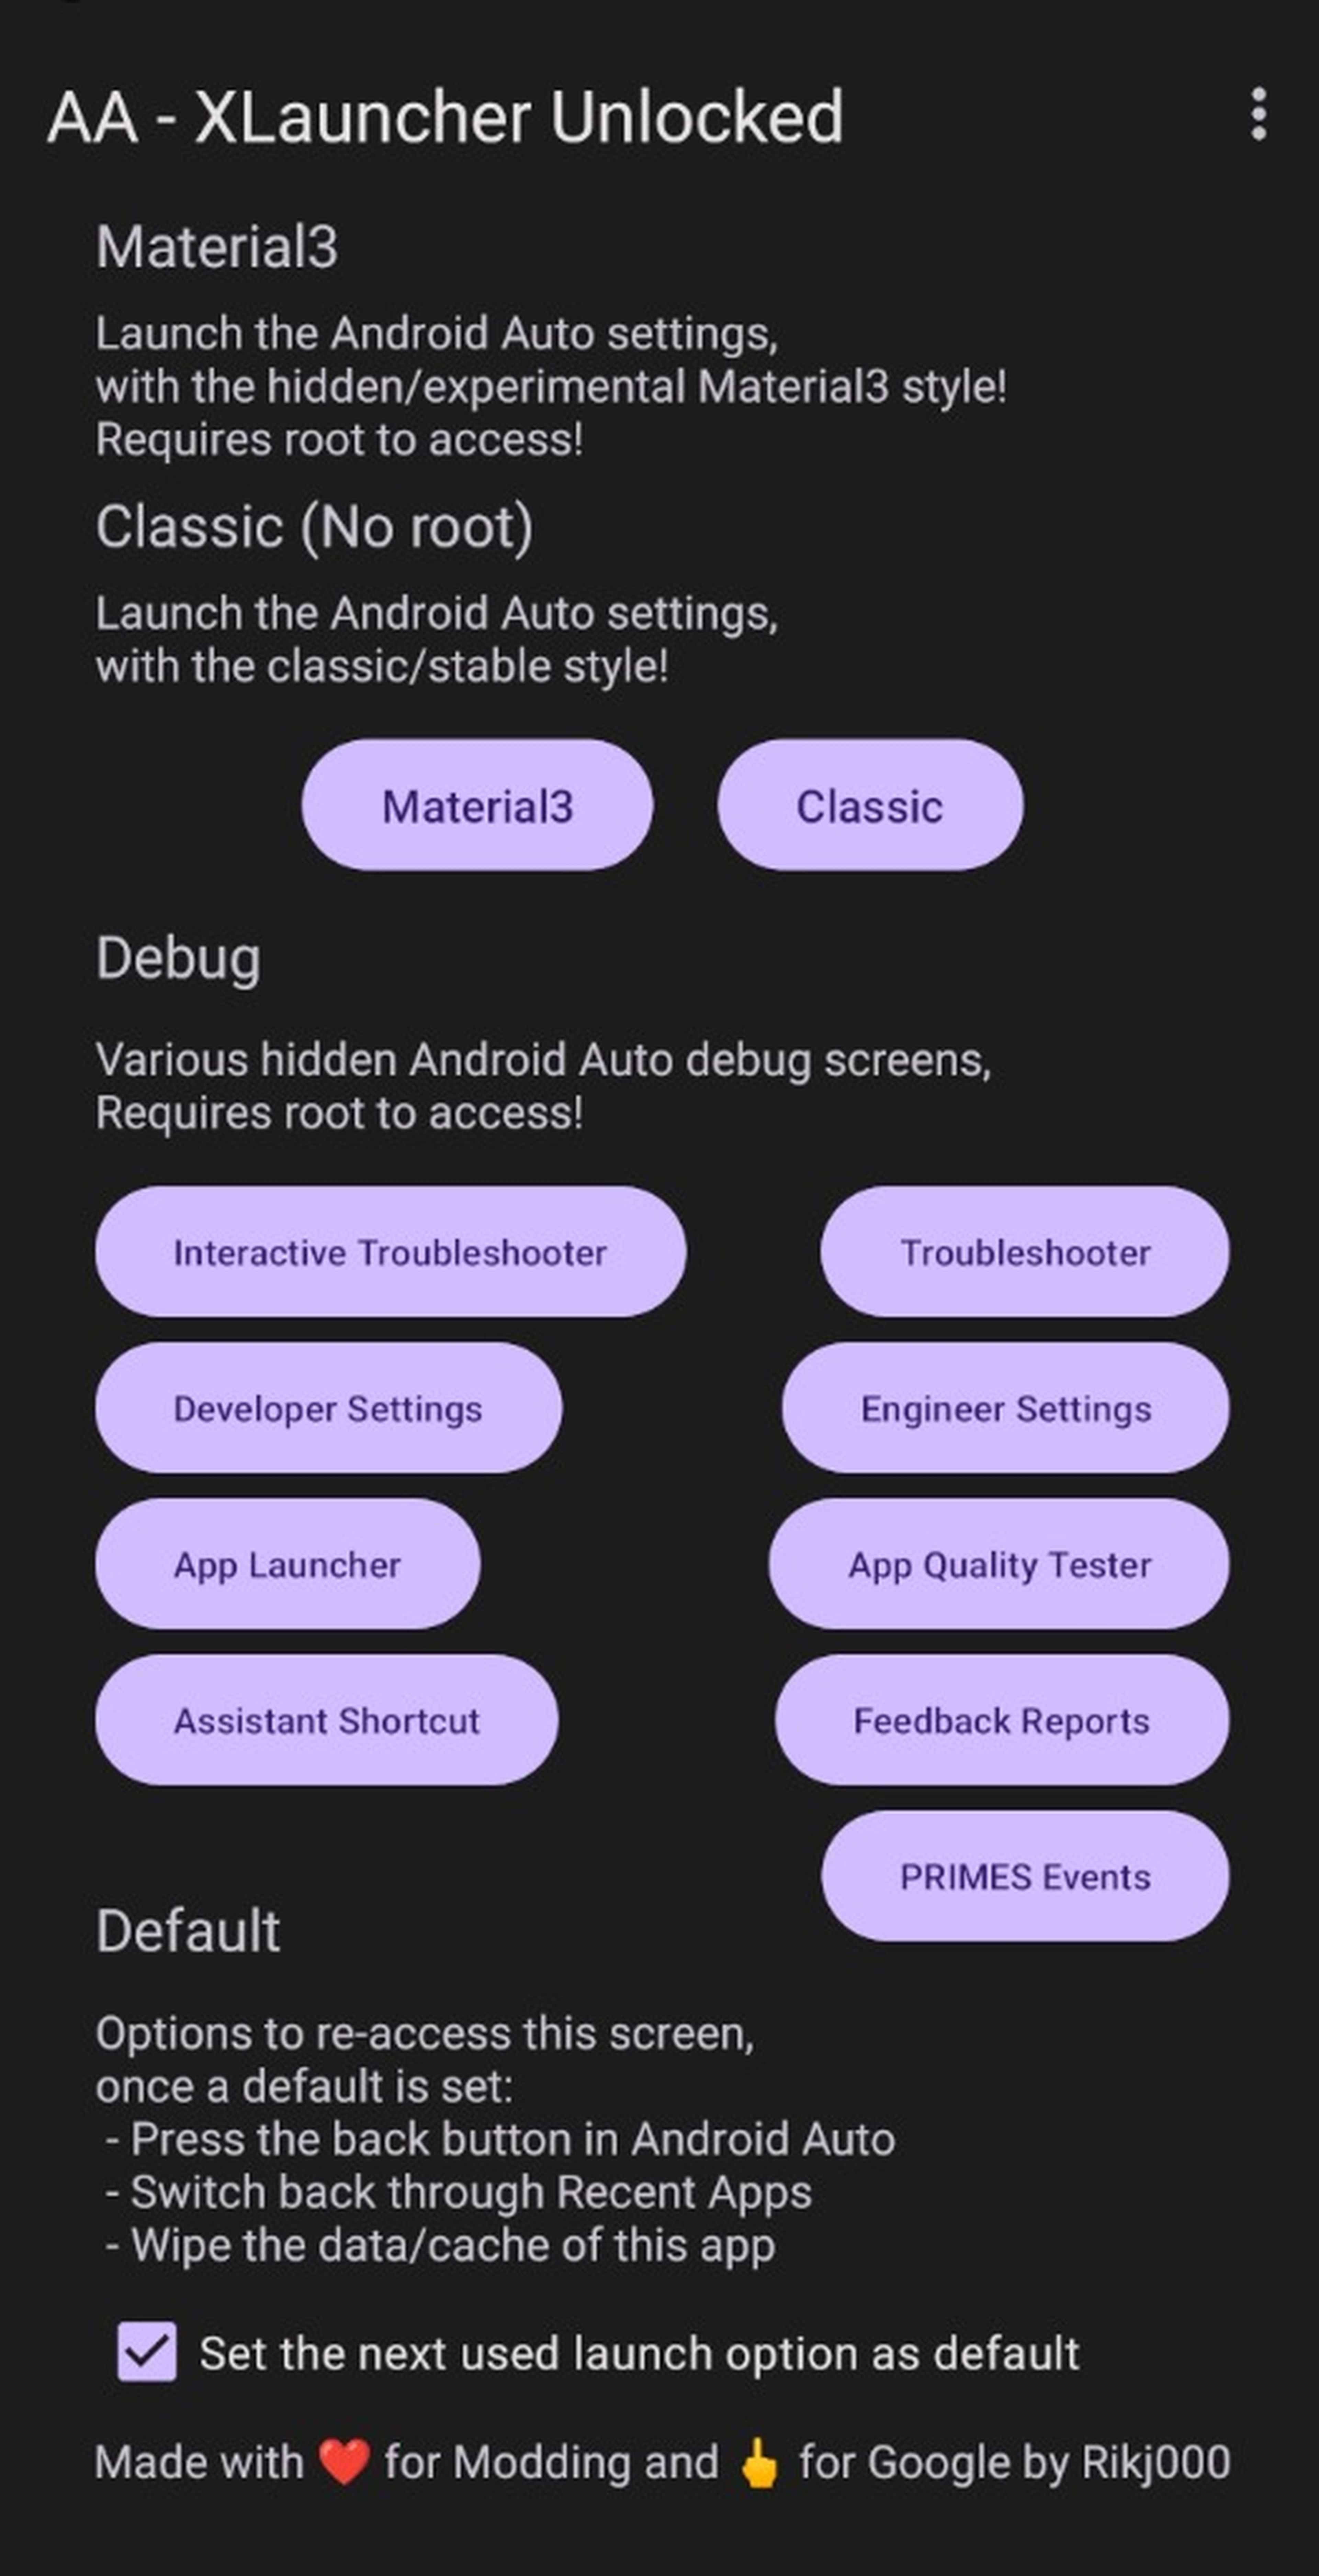 Android Auto XLauncher Unlocked